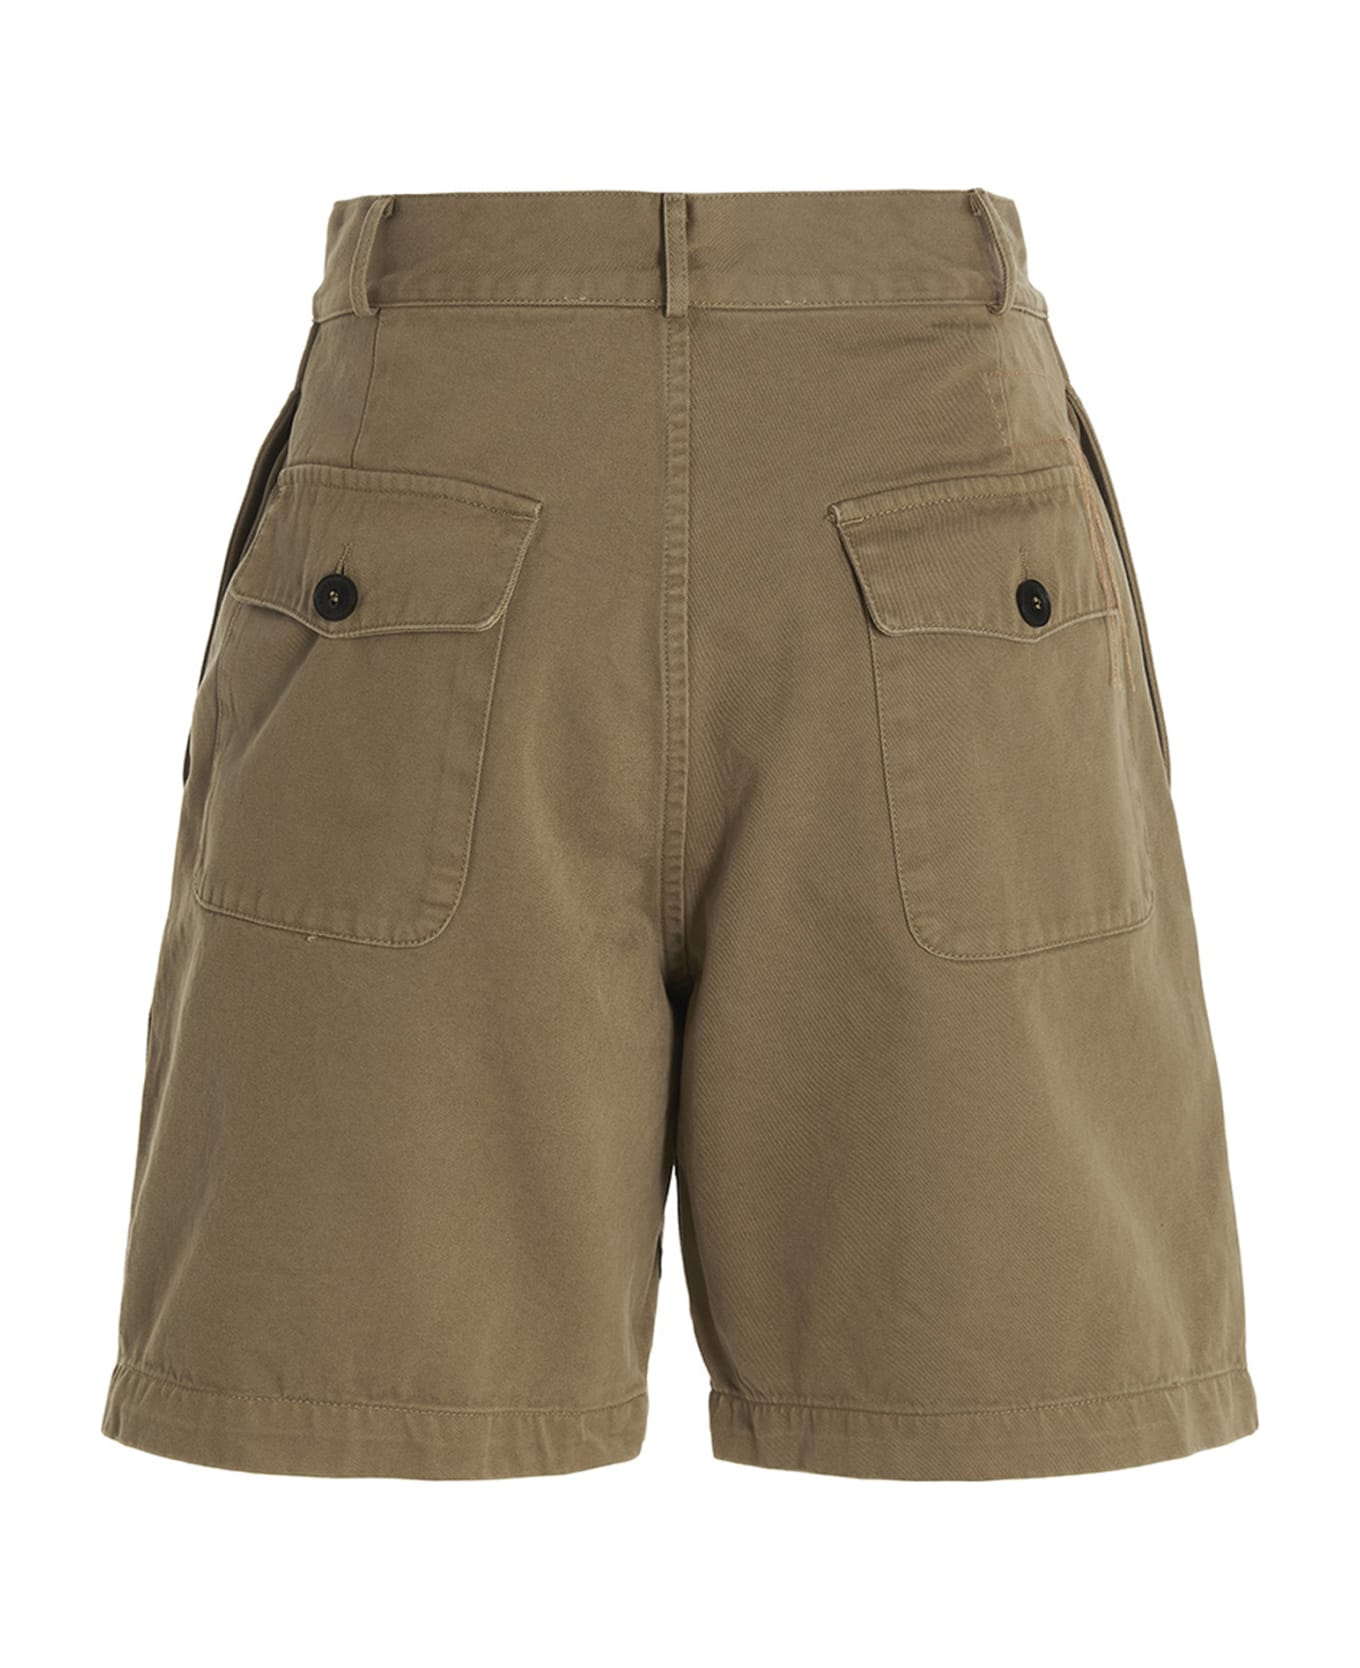 Fortela 'jillian' Bermuda Shorts - Beige